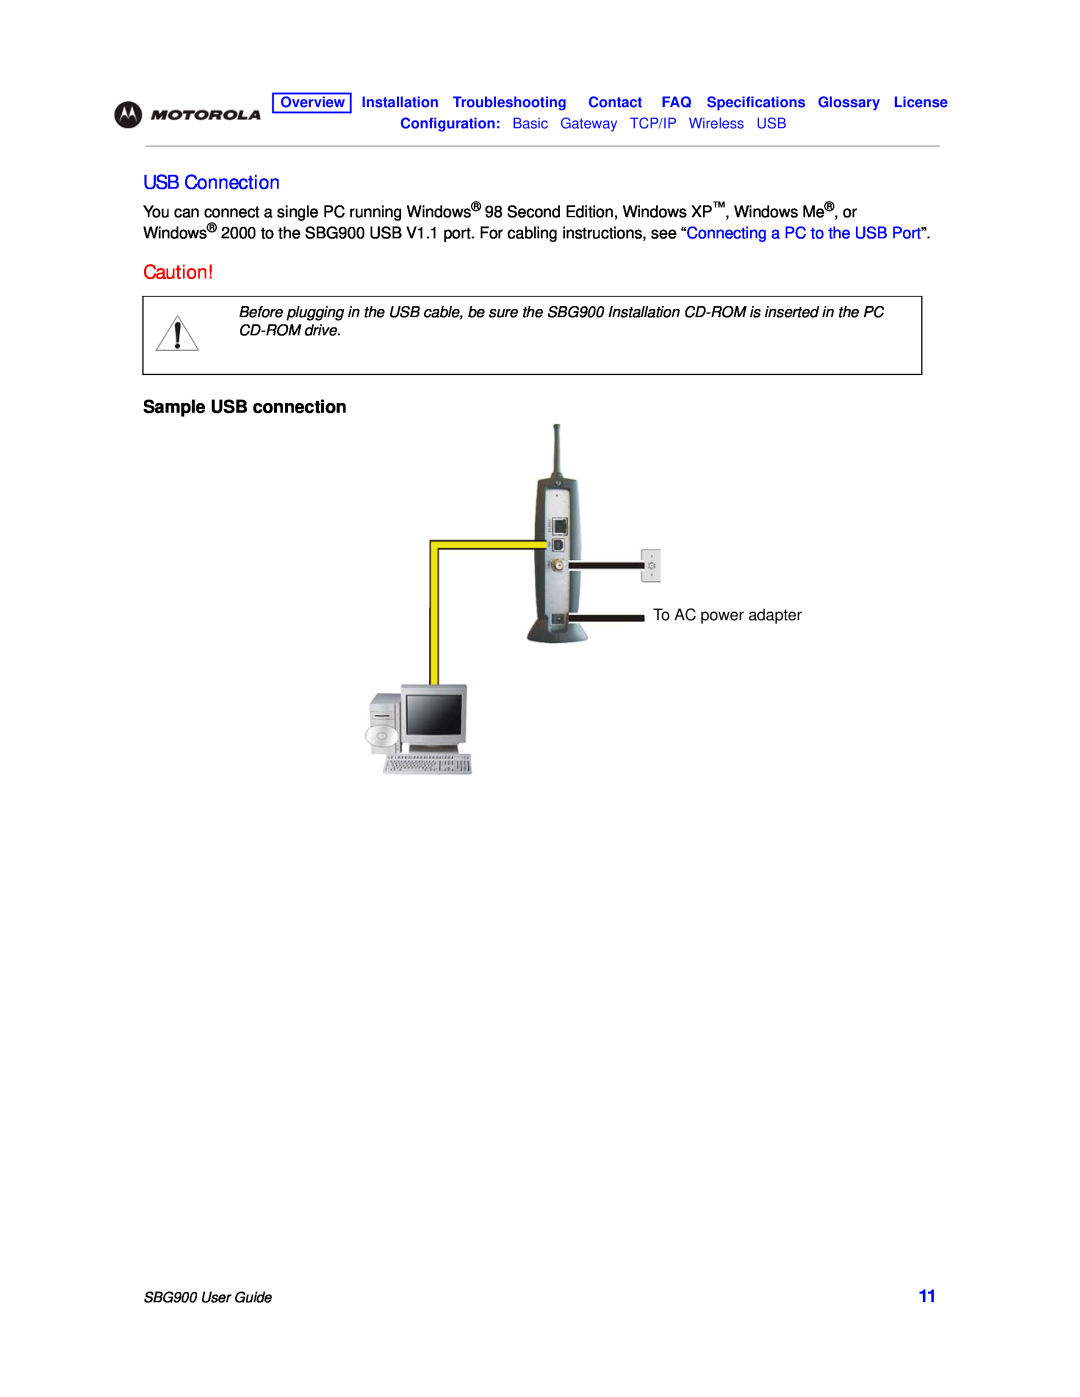 Motorola SBG900 manual USB Connection, Sample USB connection 